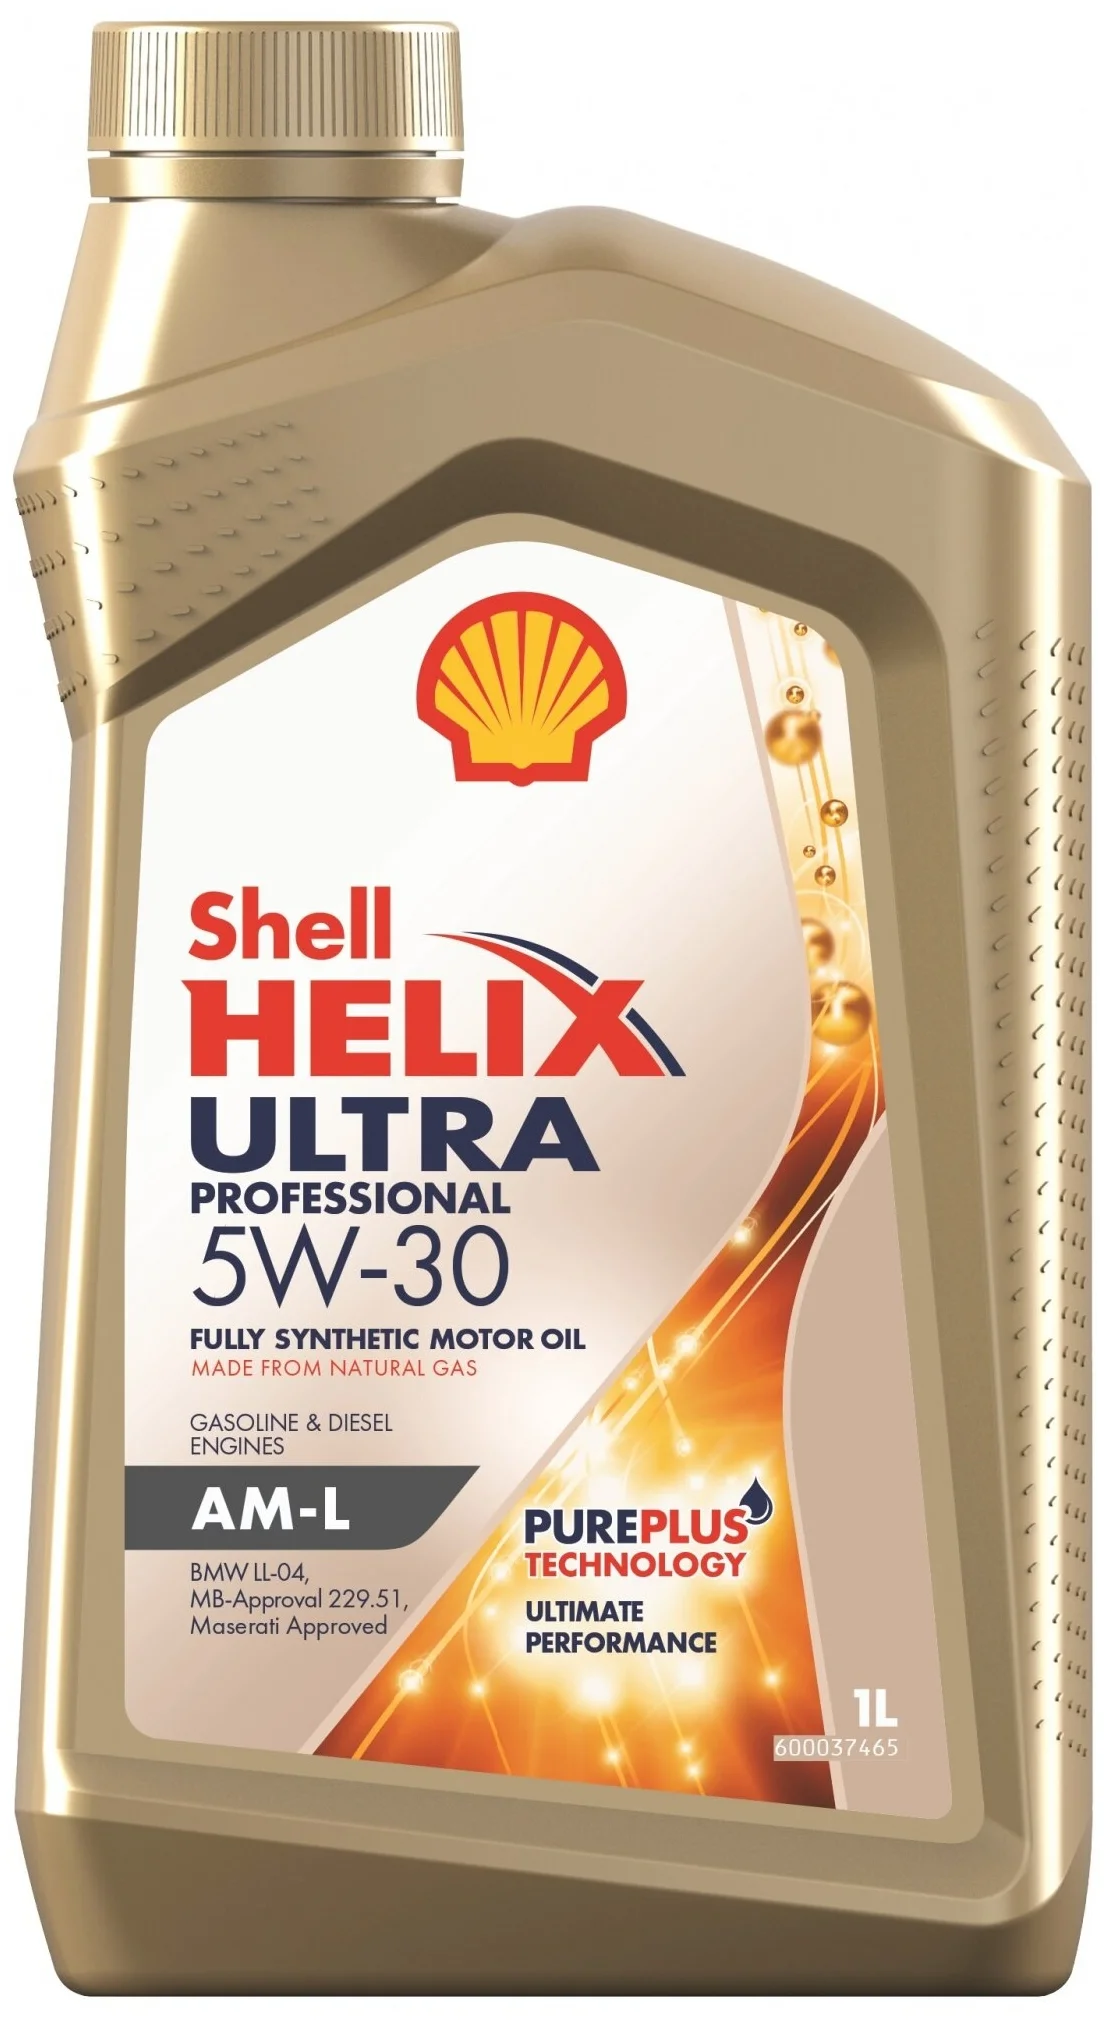 SHELL Helix Ultra Professional AM-L 5W-30 - класс вязкости: 5W-30